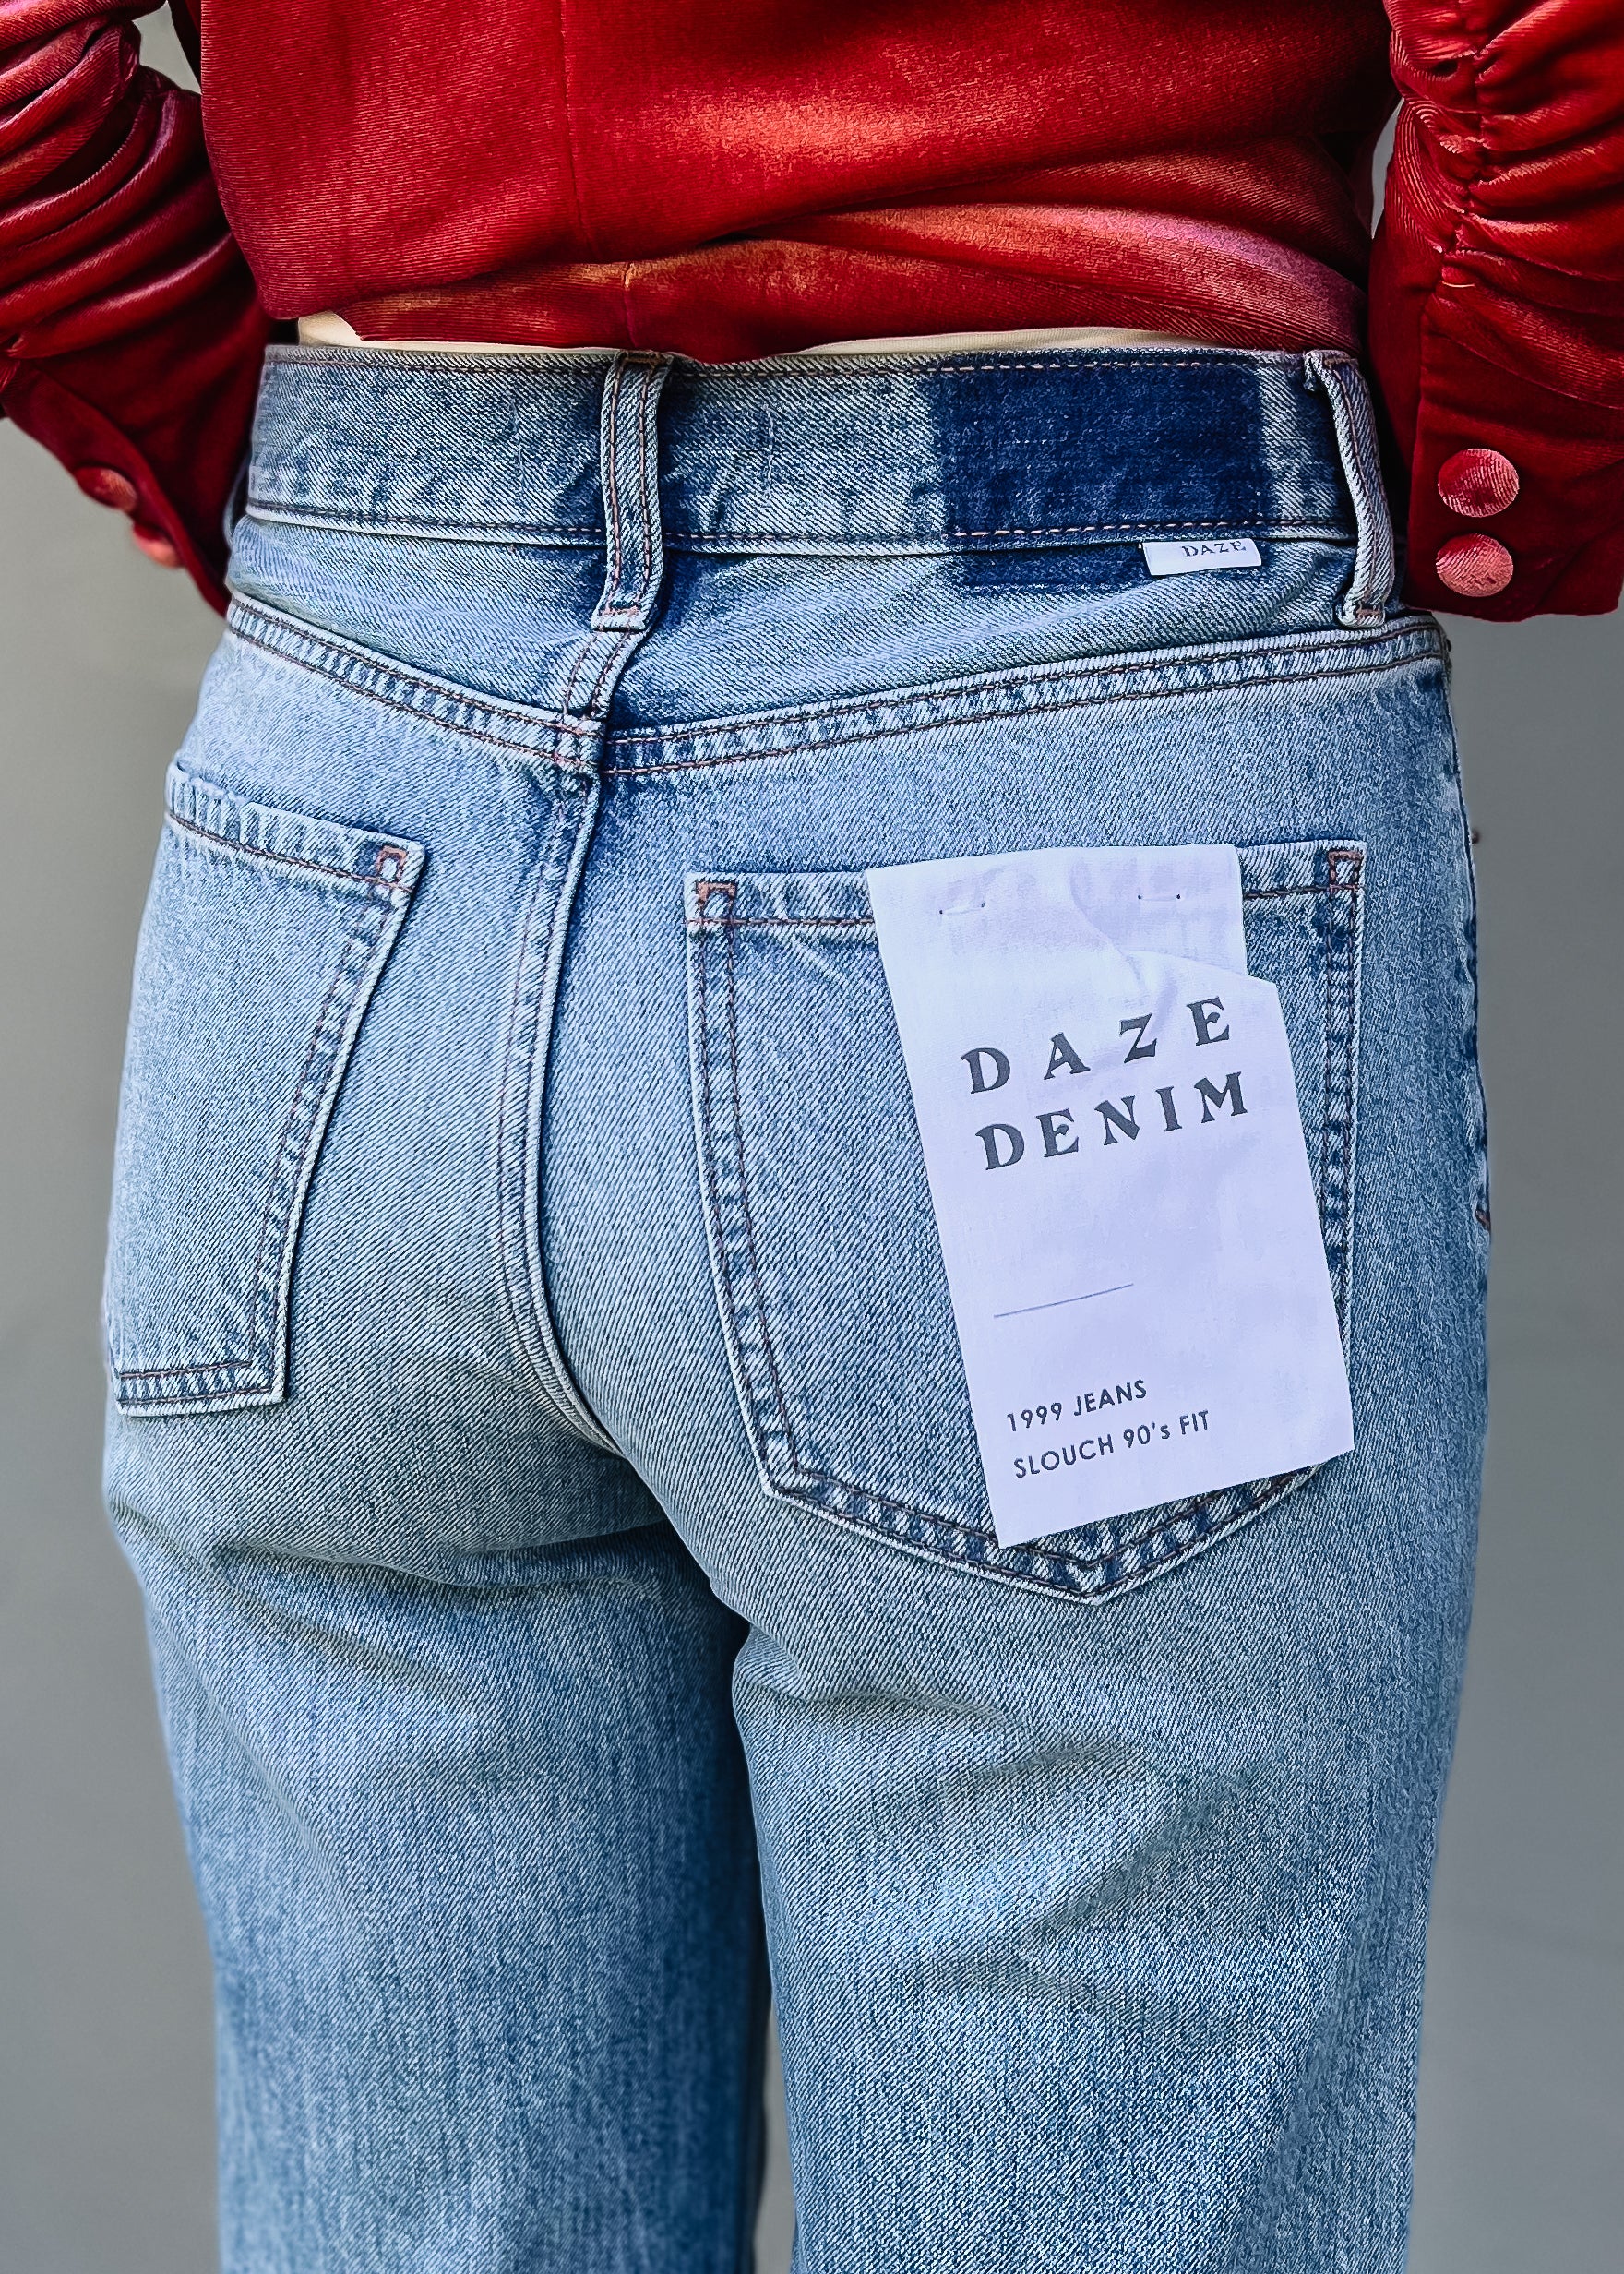 BEST SELLER Daze Denim: 1999 Jeans Slouch 90's Fit